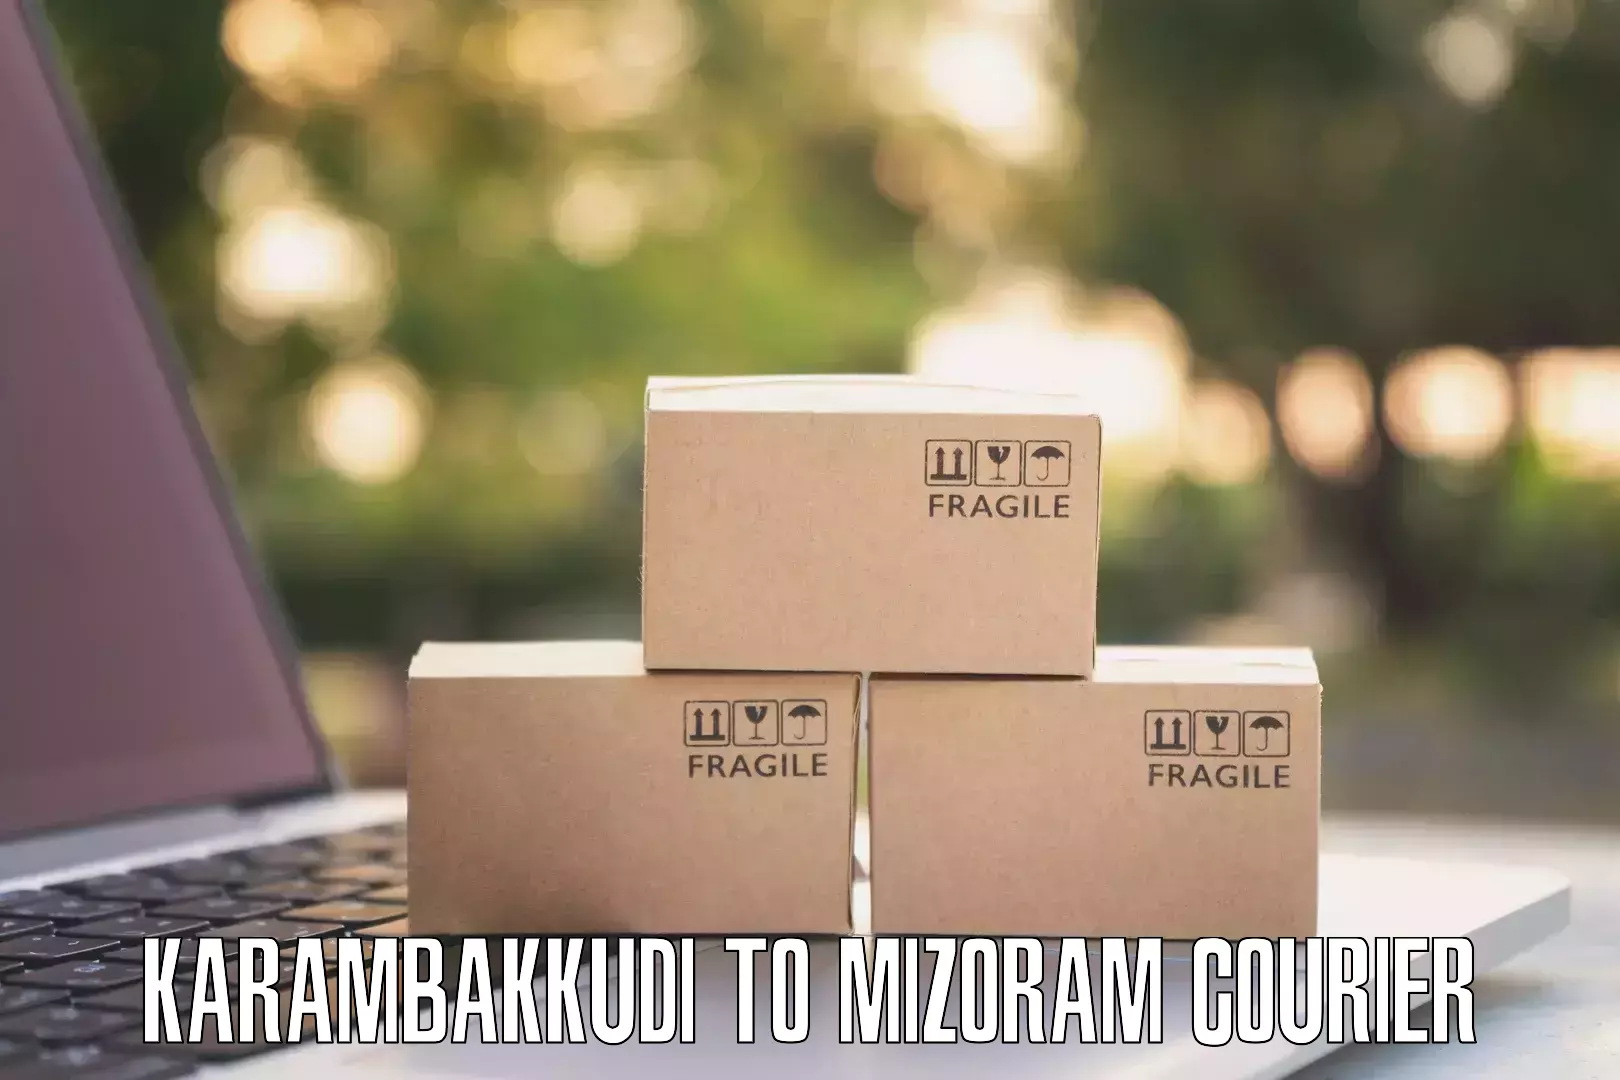 Global shipping solutions Karambakkudi to Mizoram